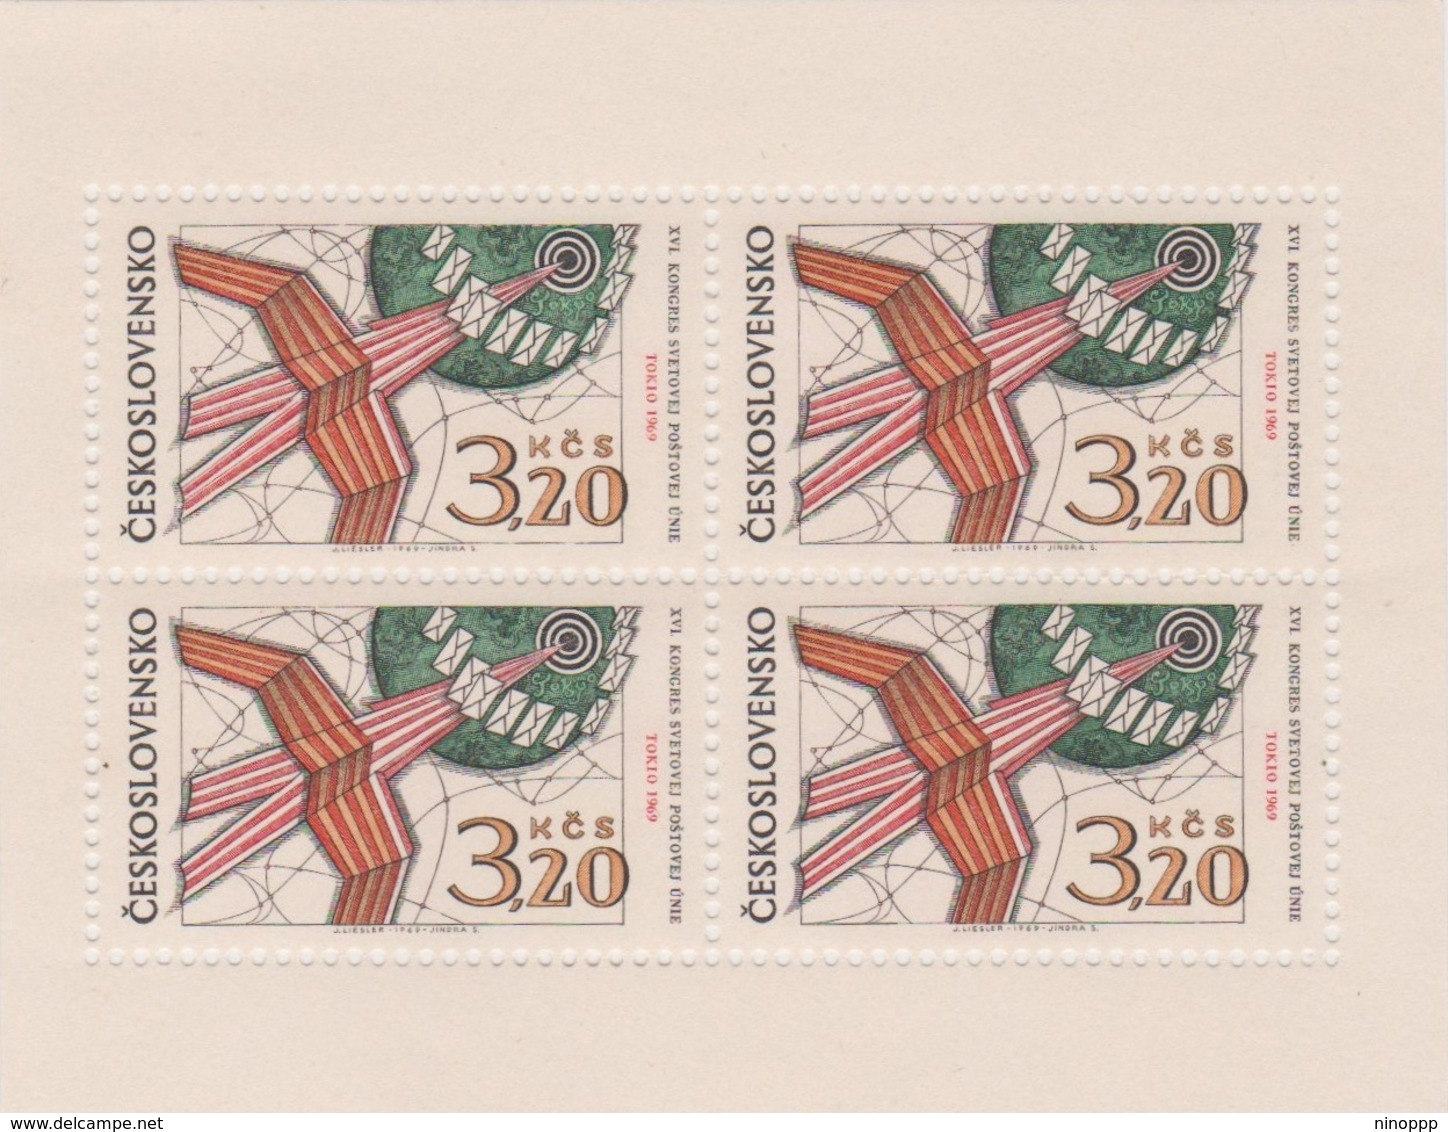 Czechoslovakia Scott 1651 1969 16th UPU Congress, Sheetlet, Mint Never Hinged - Blocks & Sheetlets